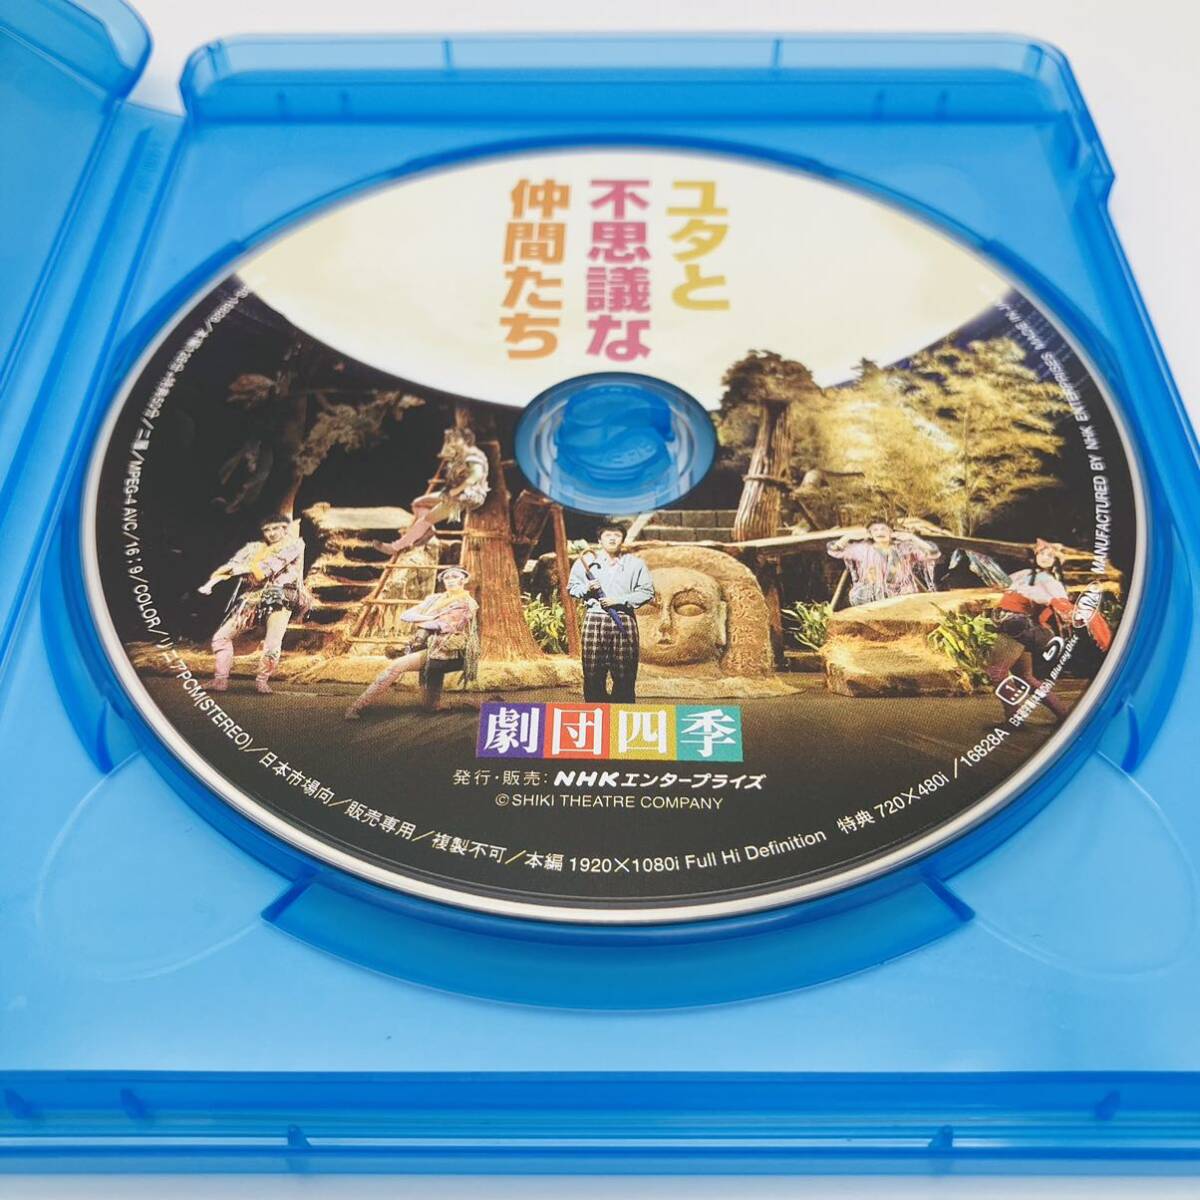 Blu-ray Shiki Theatre Company musical yuta. mystery . company .. Blue-ray postcard attaching Miura Tetsuo . profit . futoshi NHKenta- prize NSBS-16828